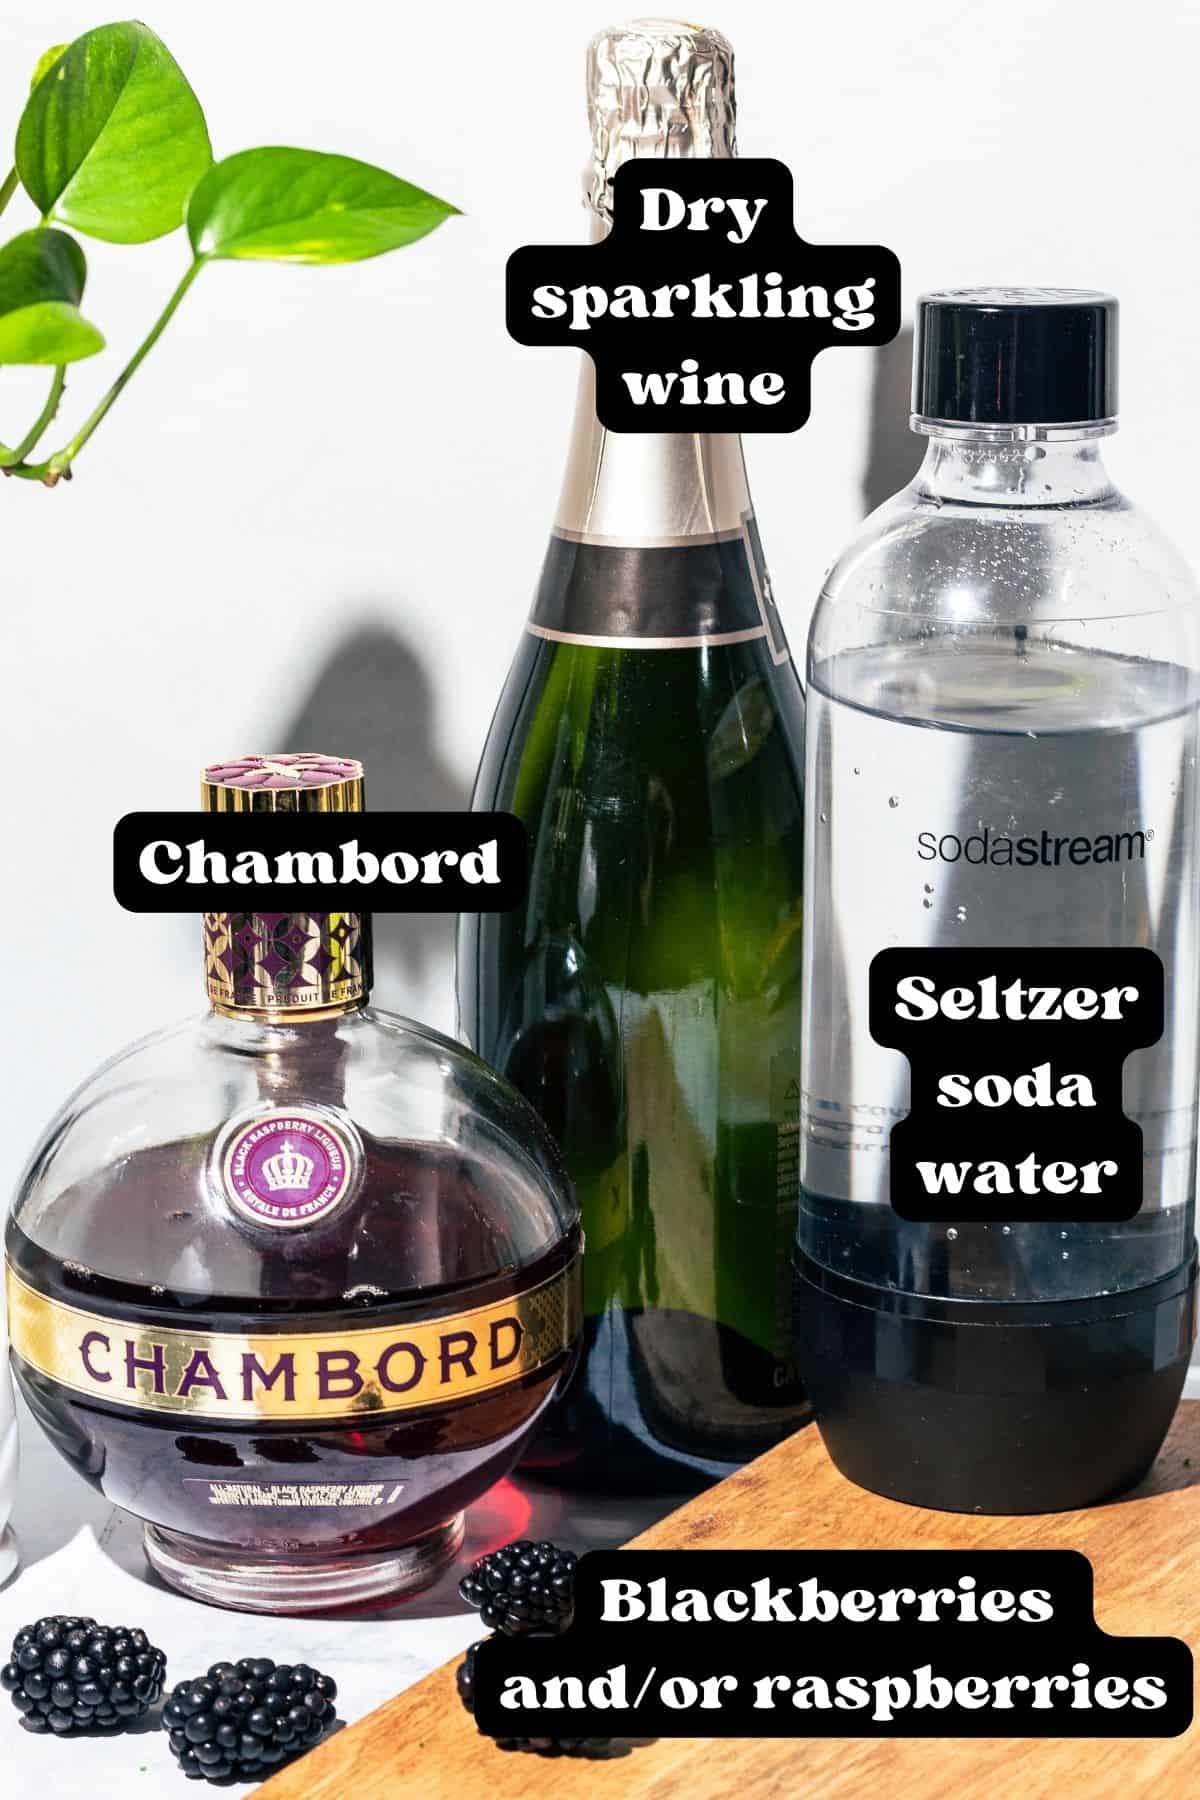 Ingredients to make the Chambord spritz.